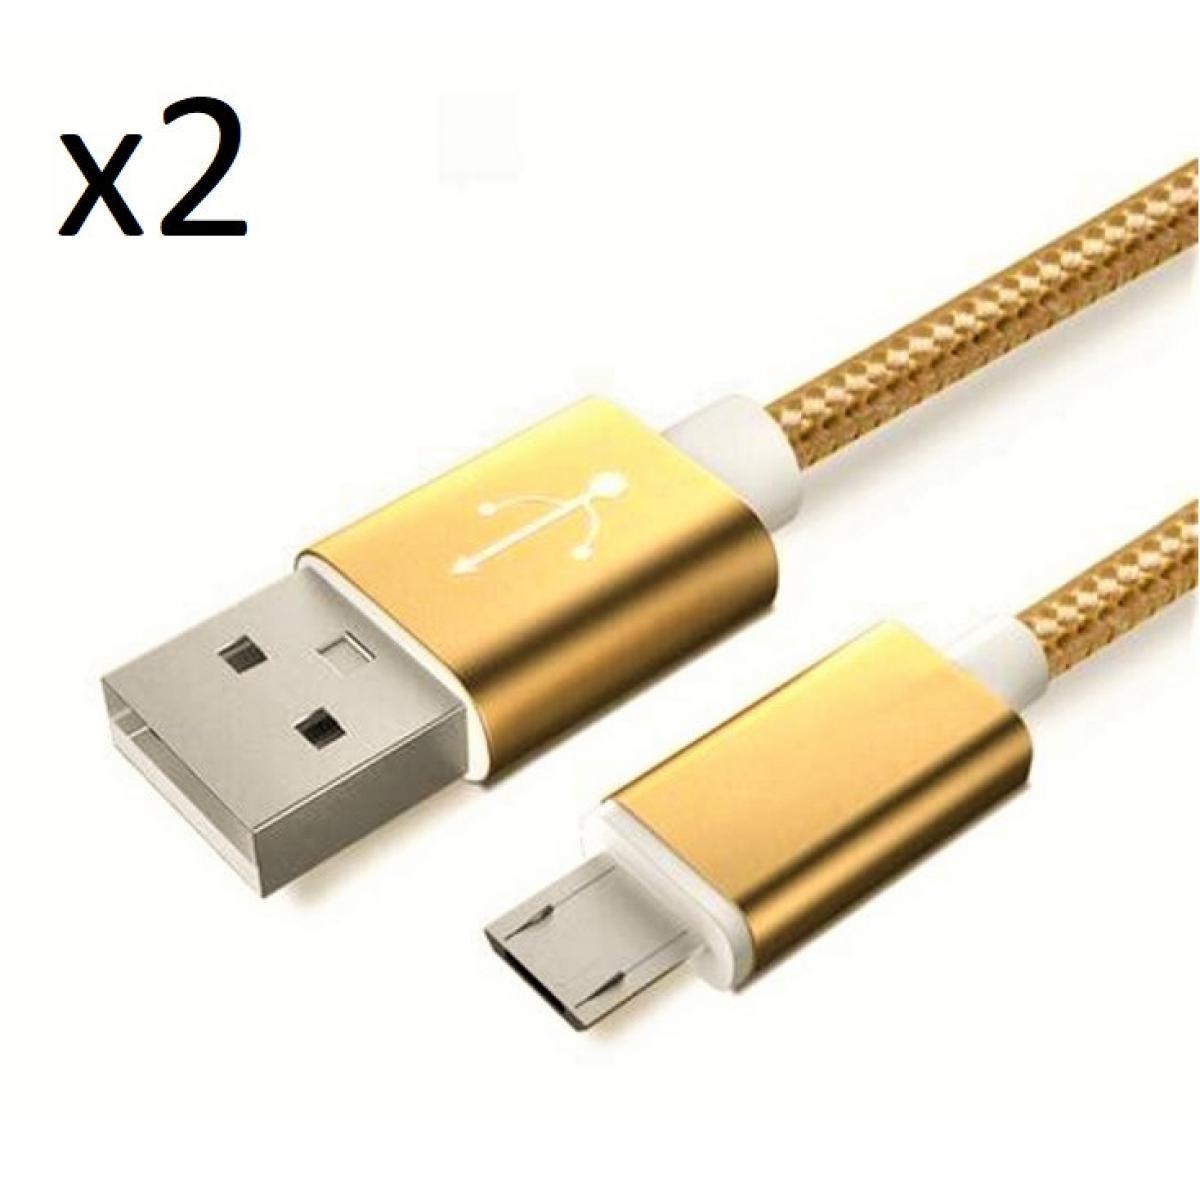 Shot - Pack de 2 Cables Metal Nylon Micro USB pour HUAWEI Y6s Smartphone Android Chargeur (OR) - Chargeur secteur téléphone